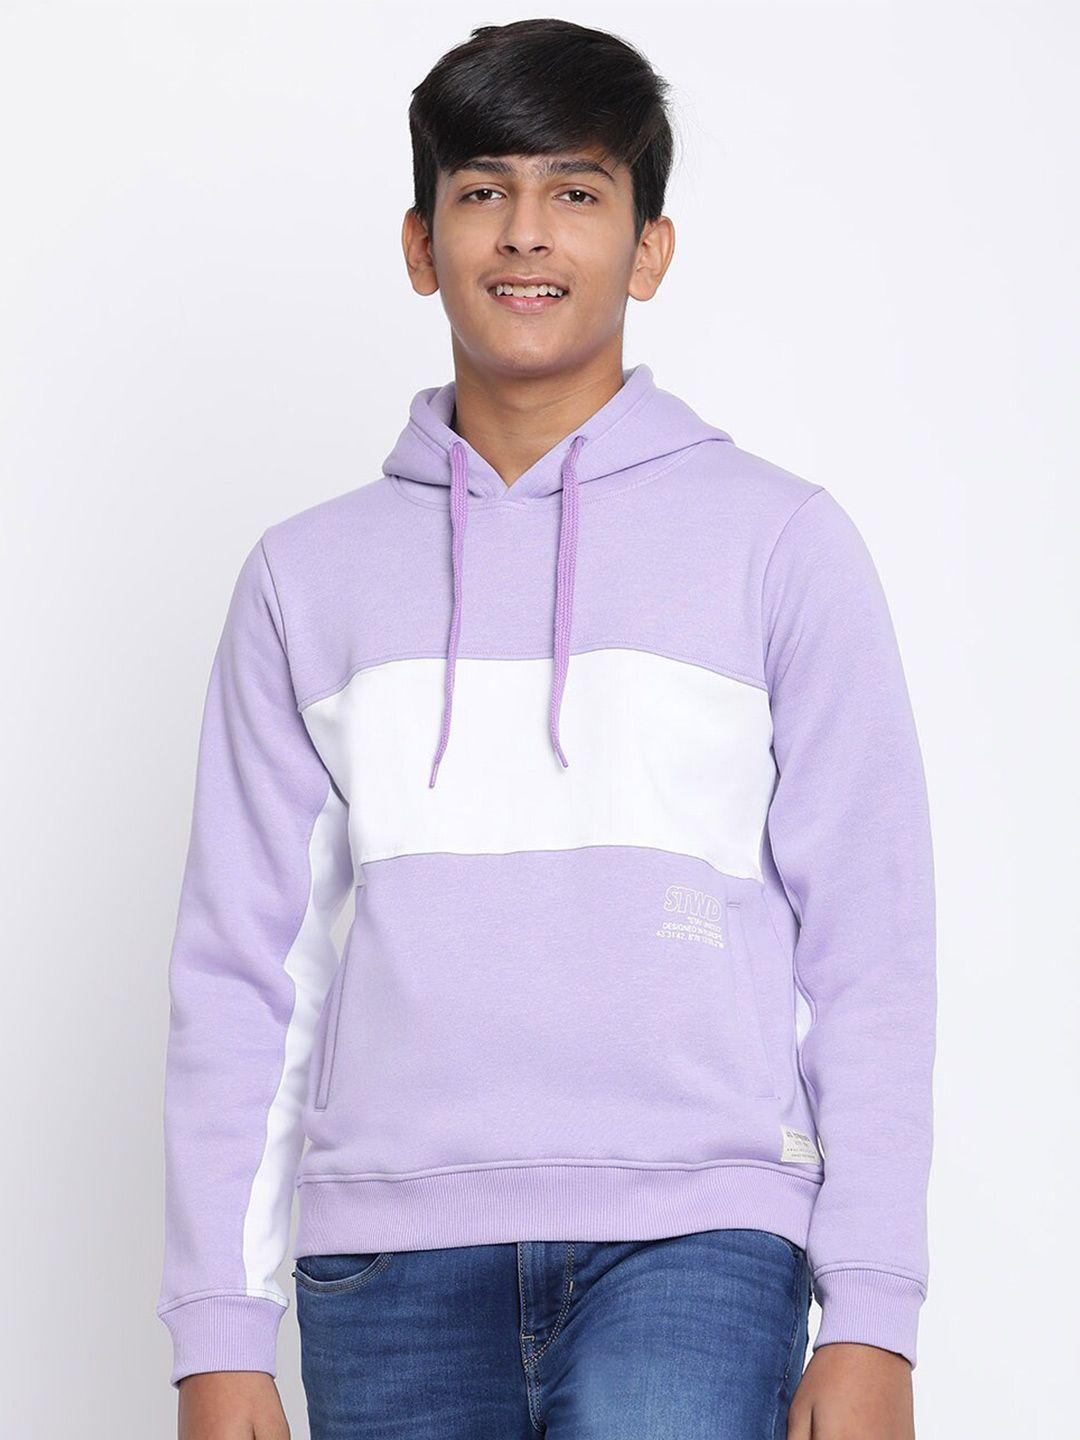 lil-tomatoes-boys-purple-&-white-colourblocked-hooded-sweatshirt